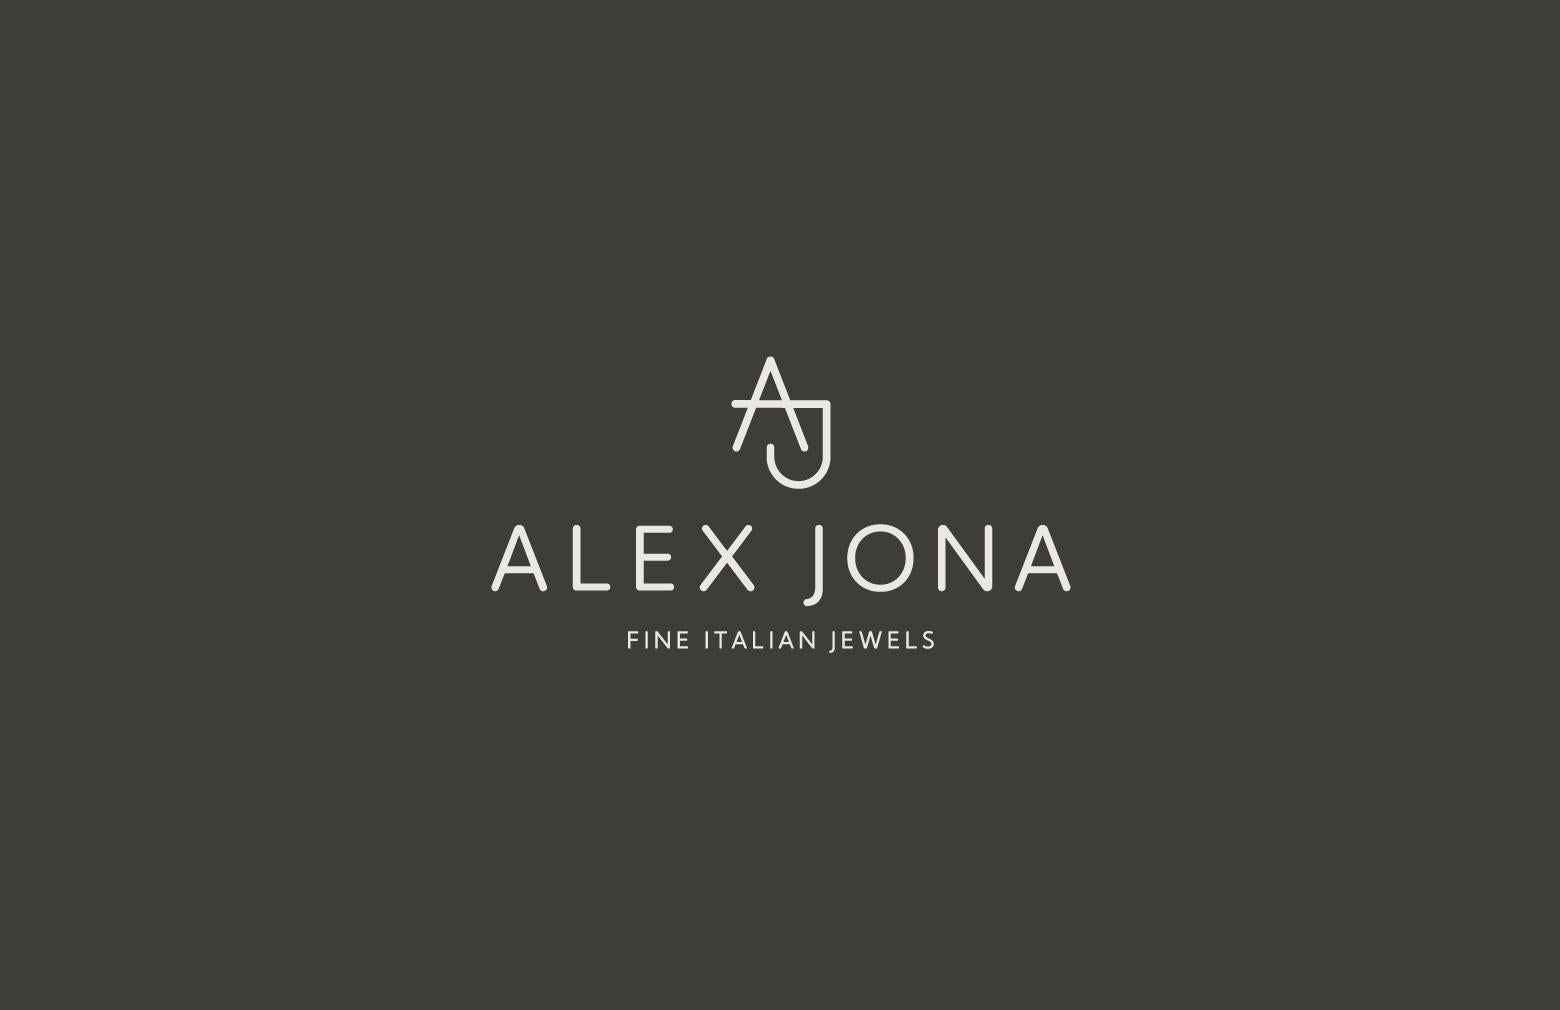 Alex Jona White Diamond 18 Karat White Gold Open Square Earrings For Sale 6